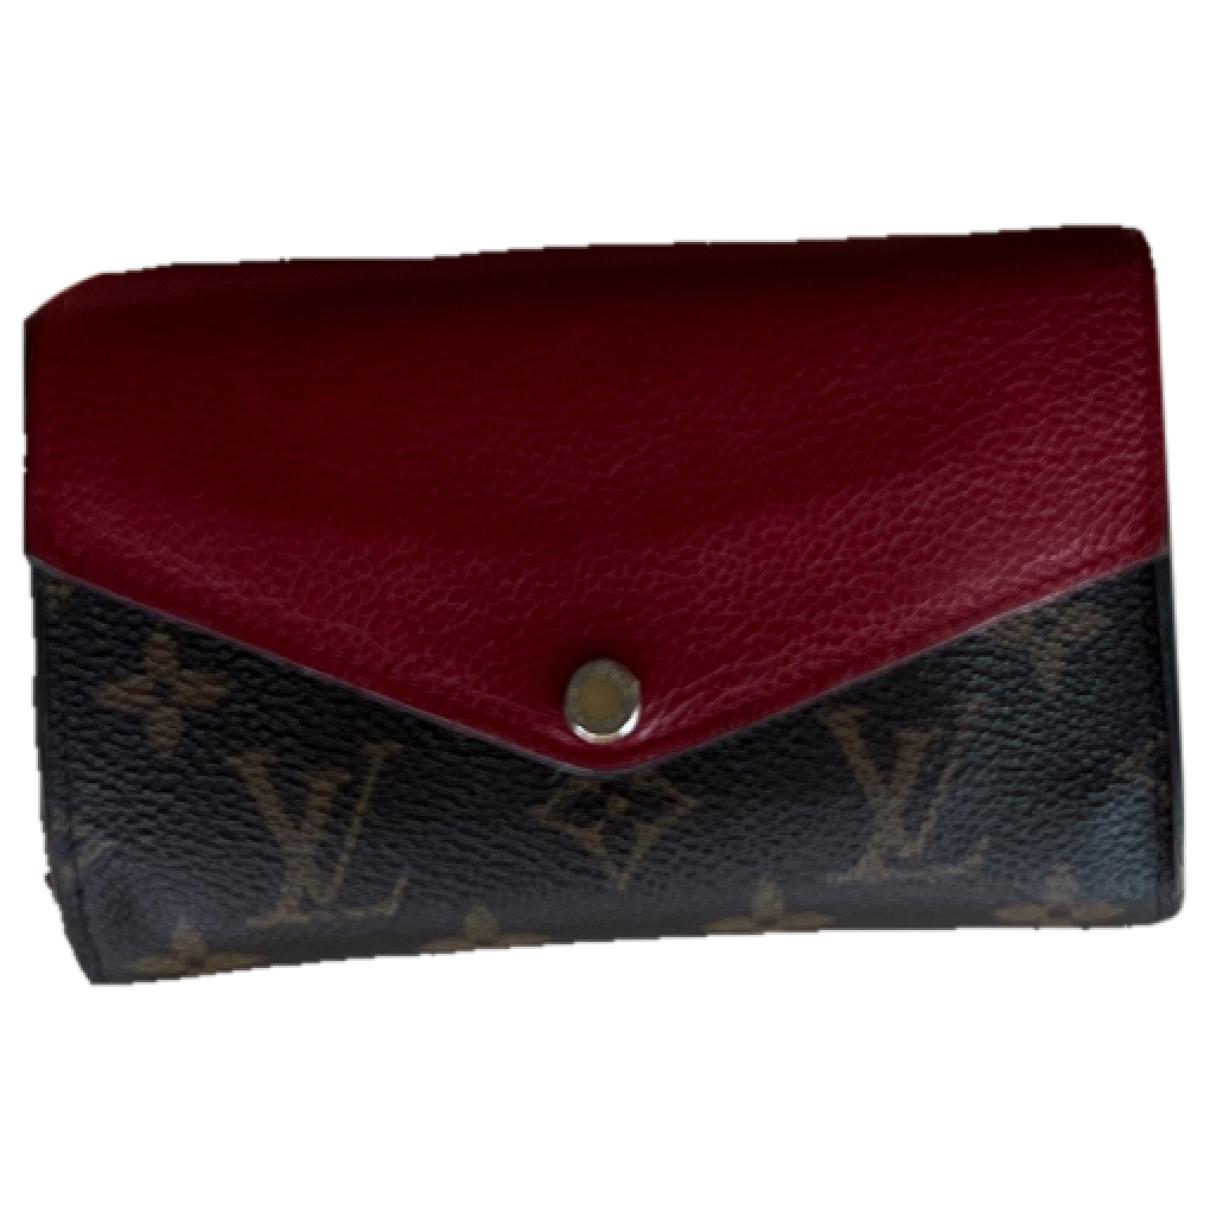 Pallas leather wallet